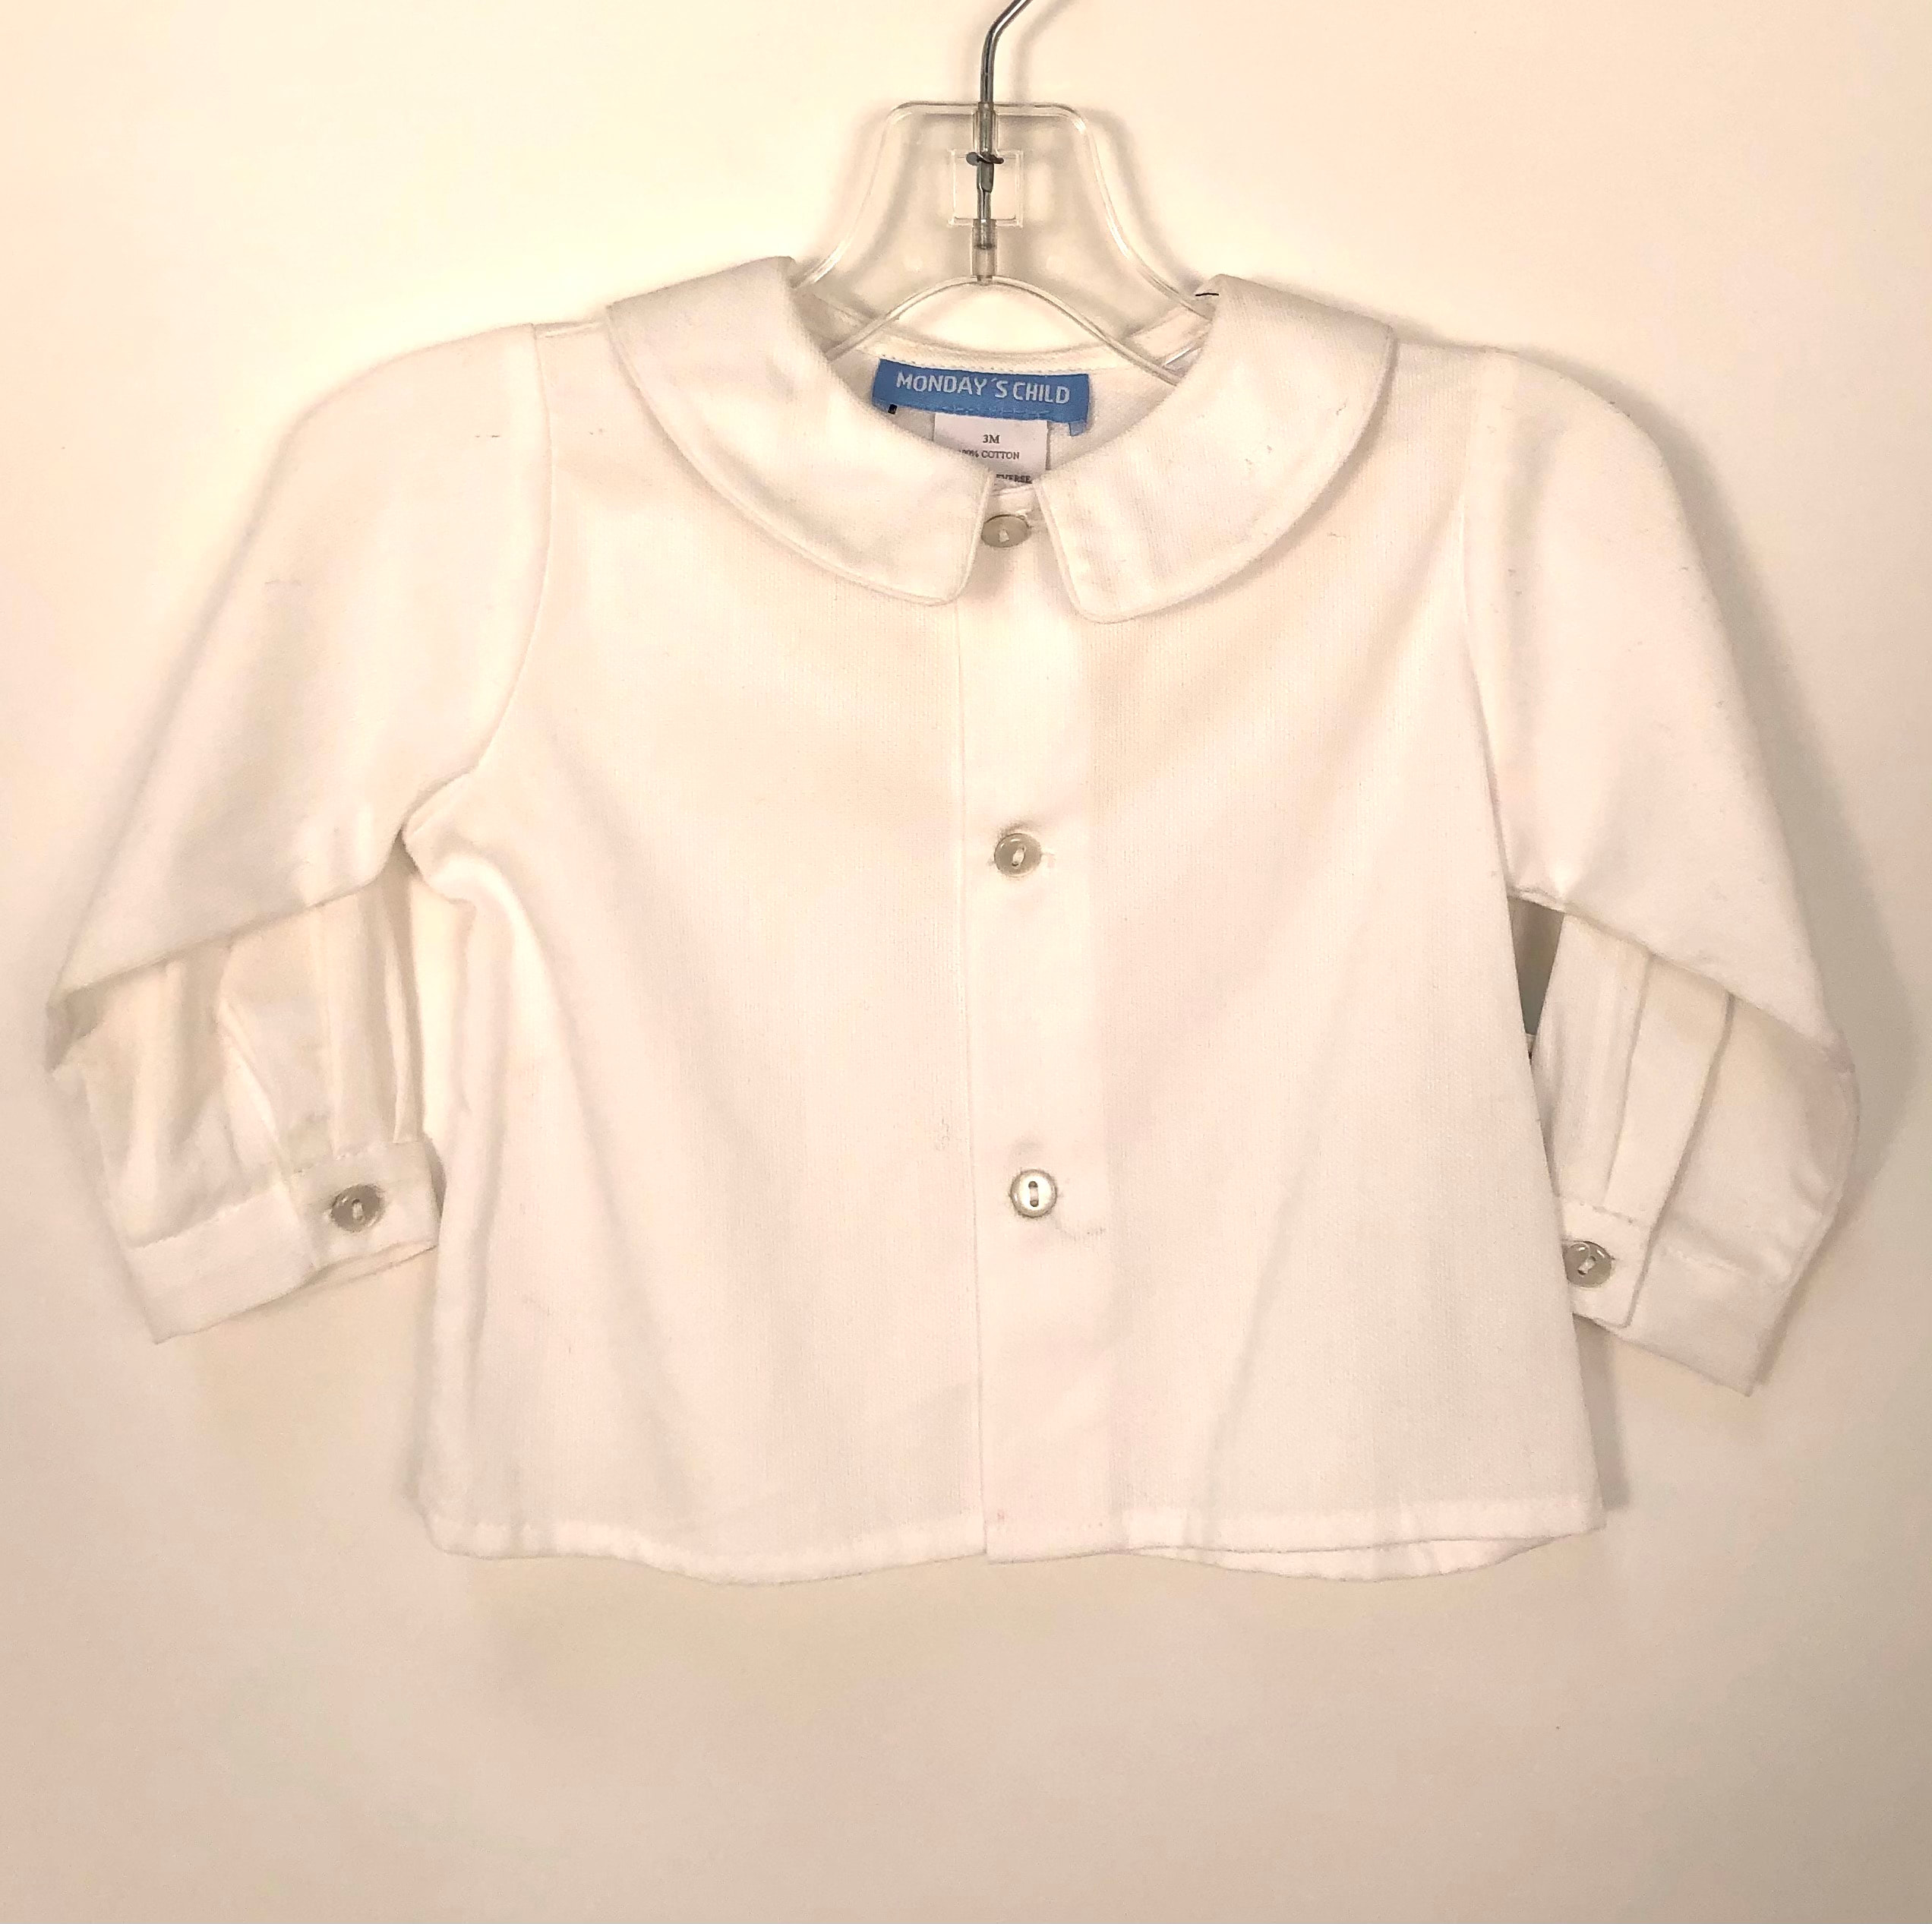 G871W White Collared Shirt